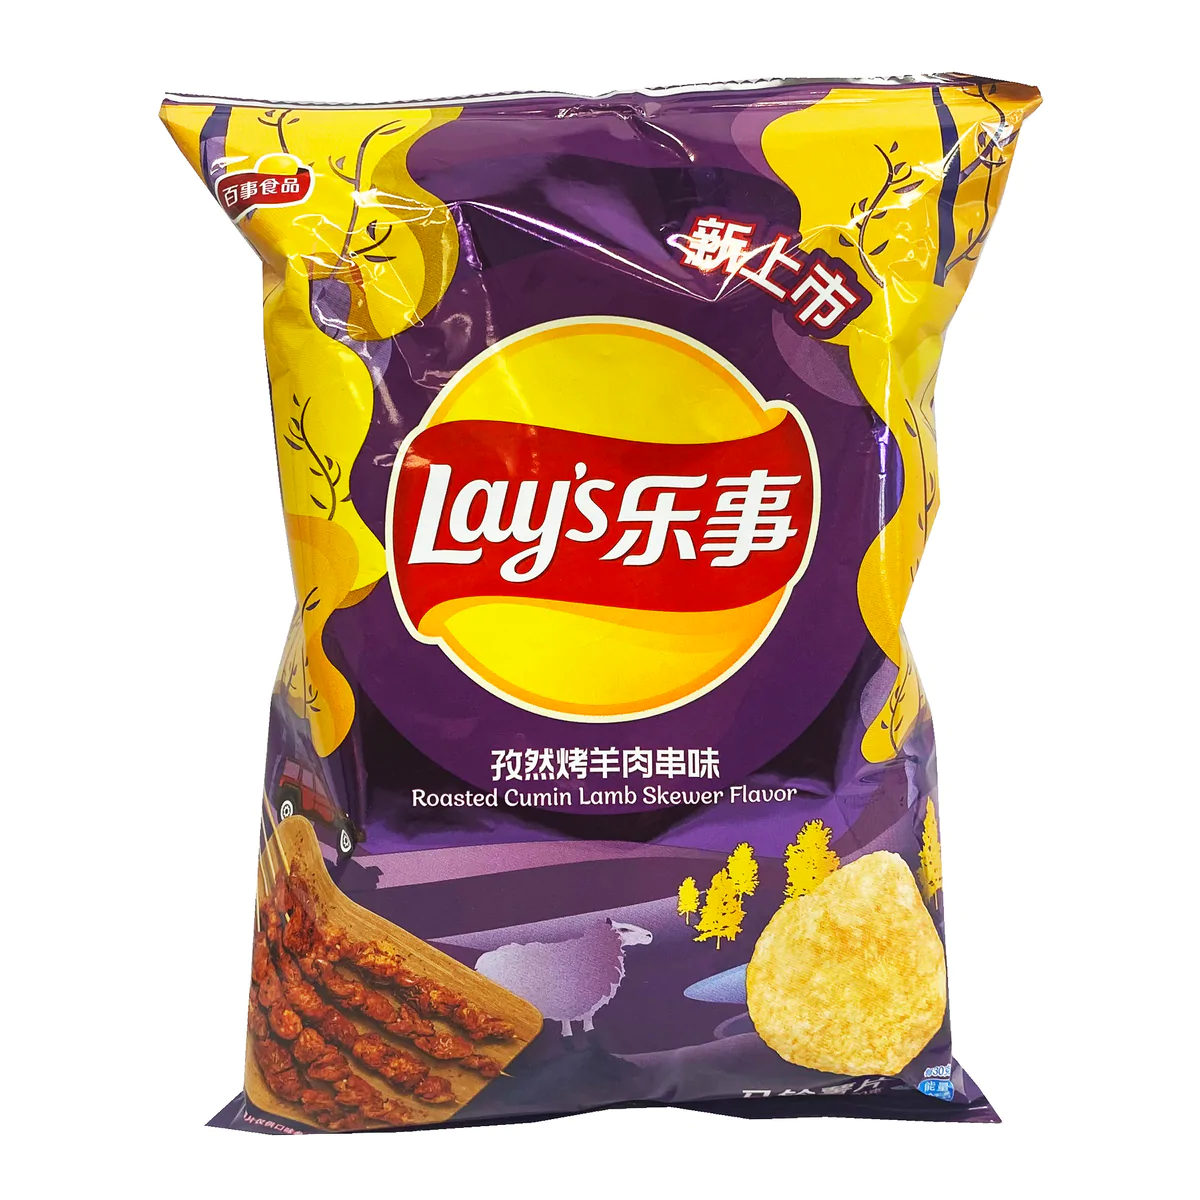 Lay's  - Roasted Cumin Lamb Skewer Flavor - Potato Chips - China Edition